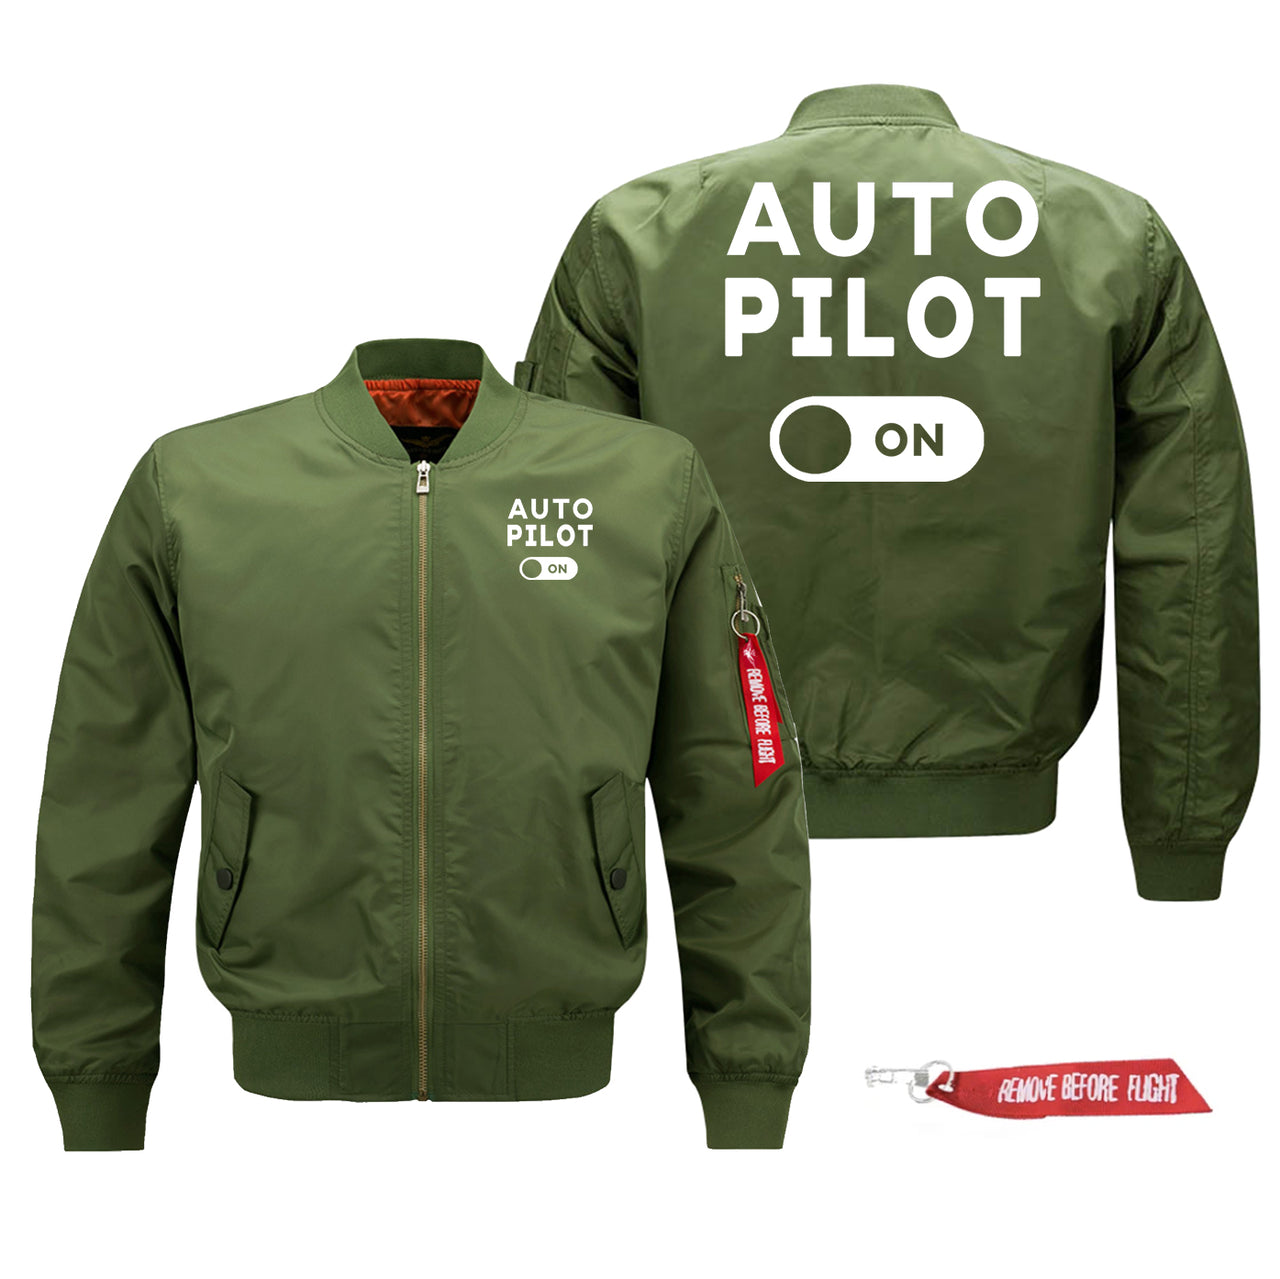 Auto Pilot ON Designed Pilot Jackets (Customizable)